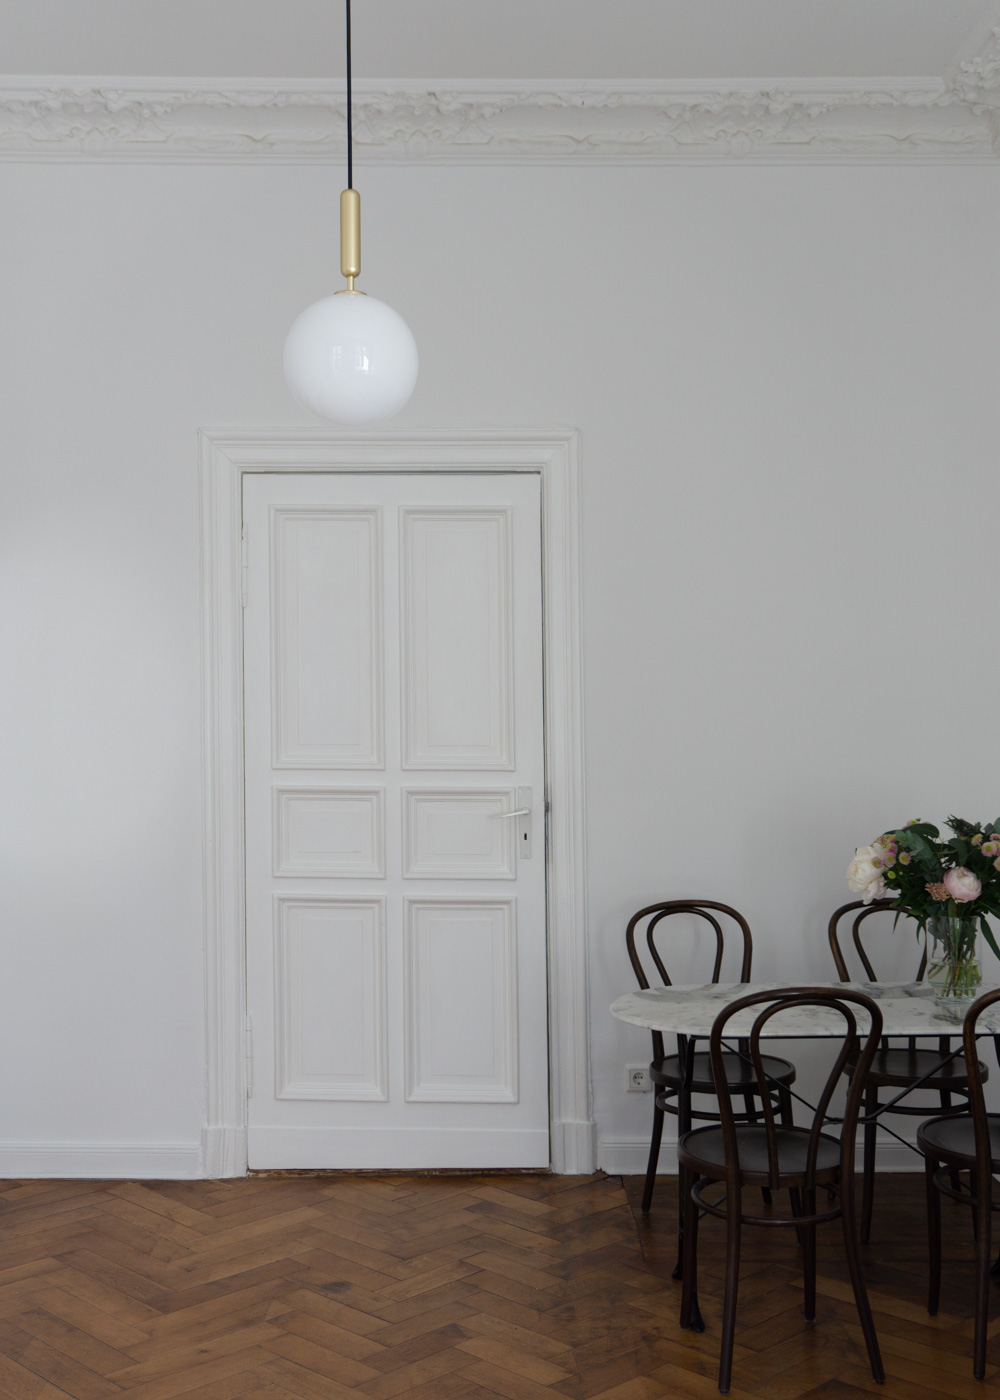 Nuura Lighting, Danish Design, Wood Floors, White Living Room, Thonet Chairs, Gold Ball Ceiling Lamp, Miira, Minimalist Home, Classic Interior, Timeless Style, Scandinavian Decor, Neutral Aesthetic